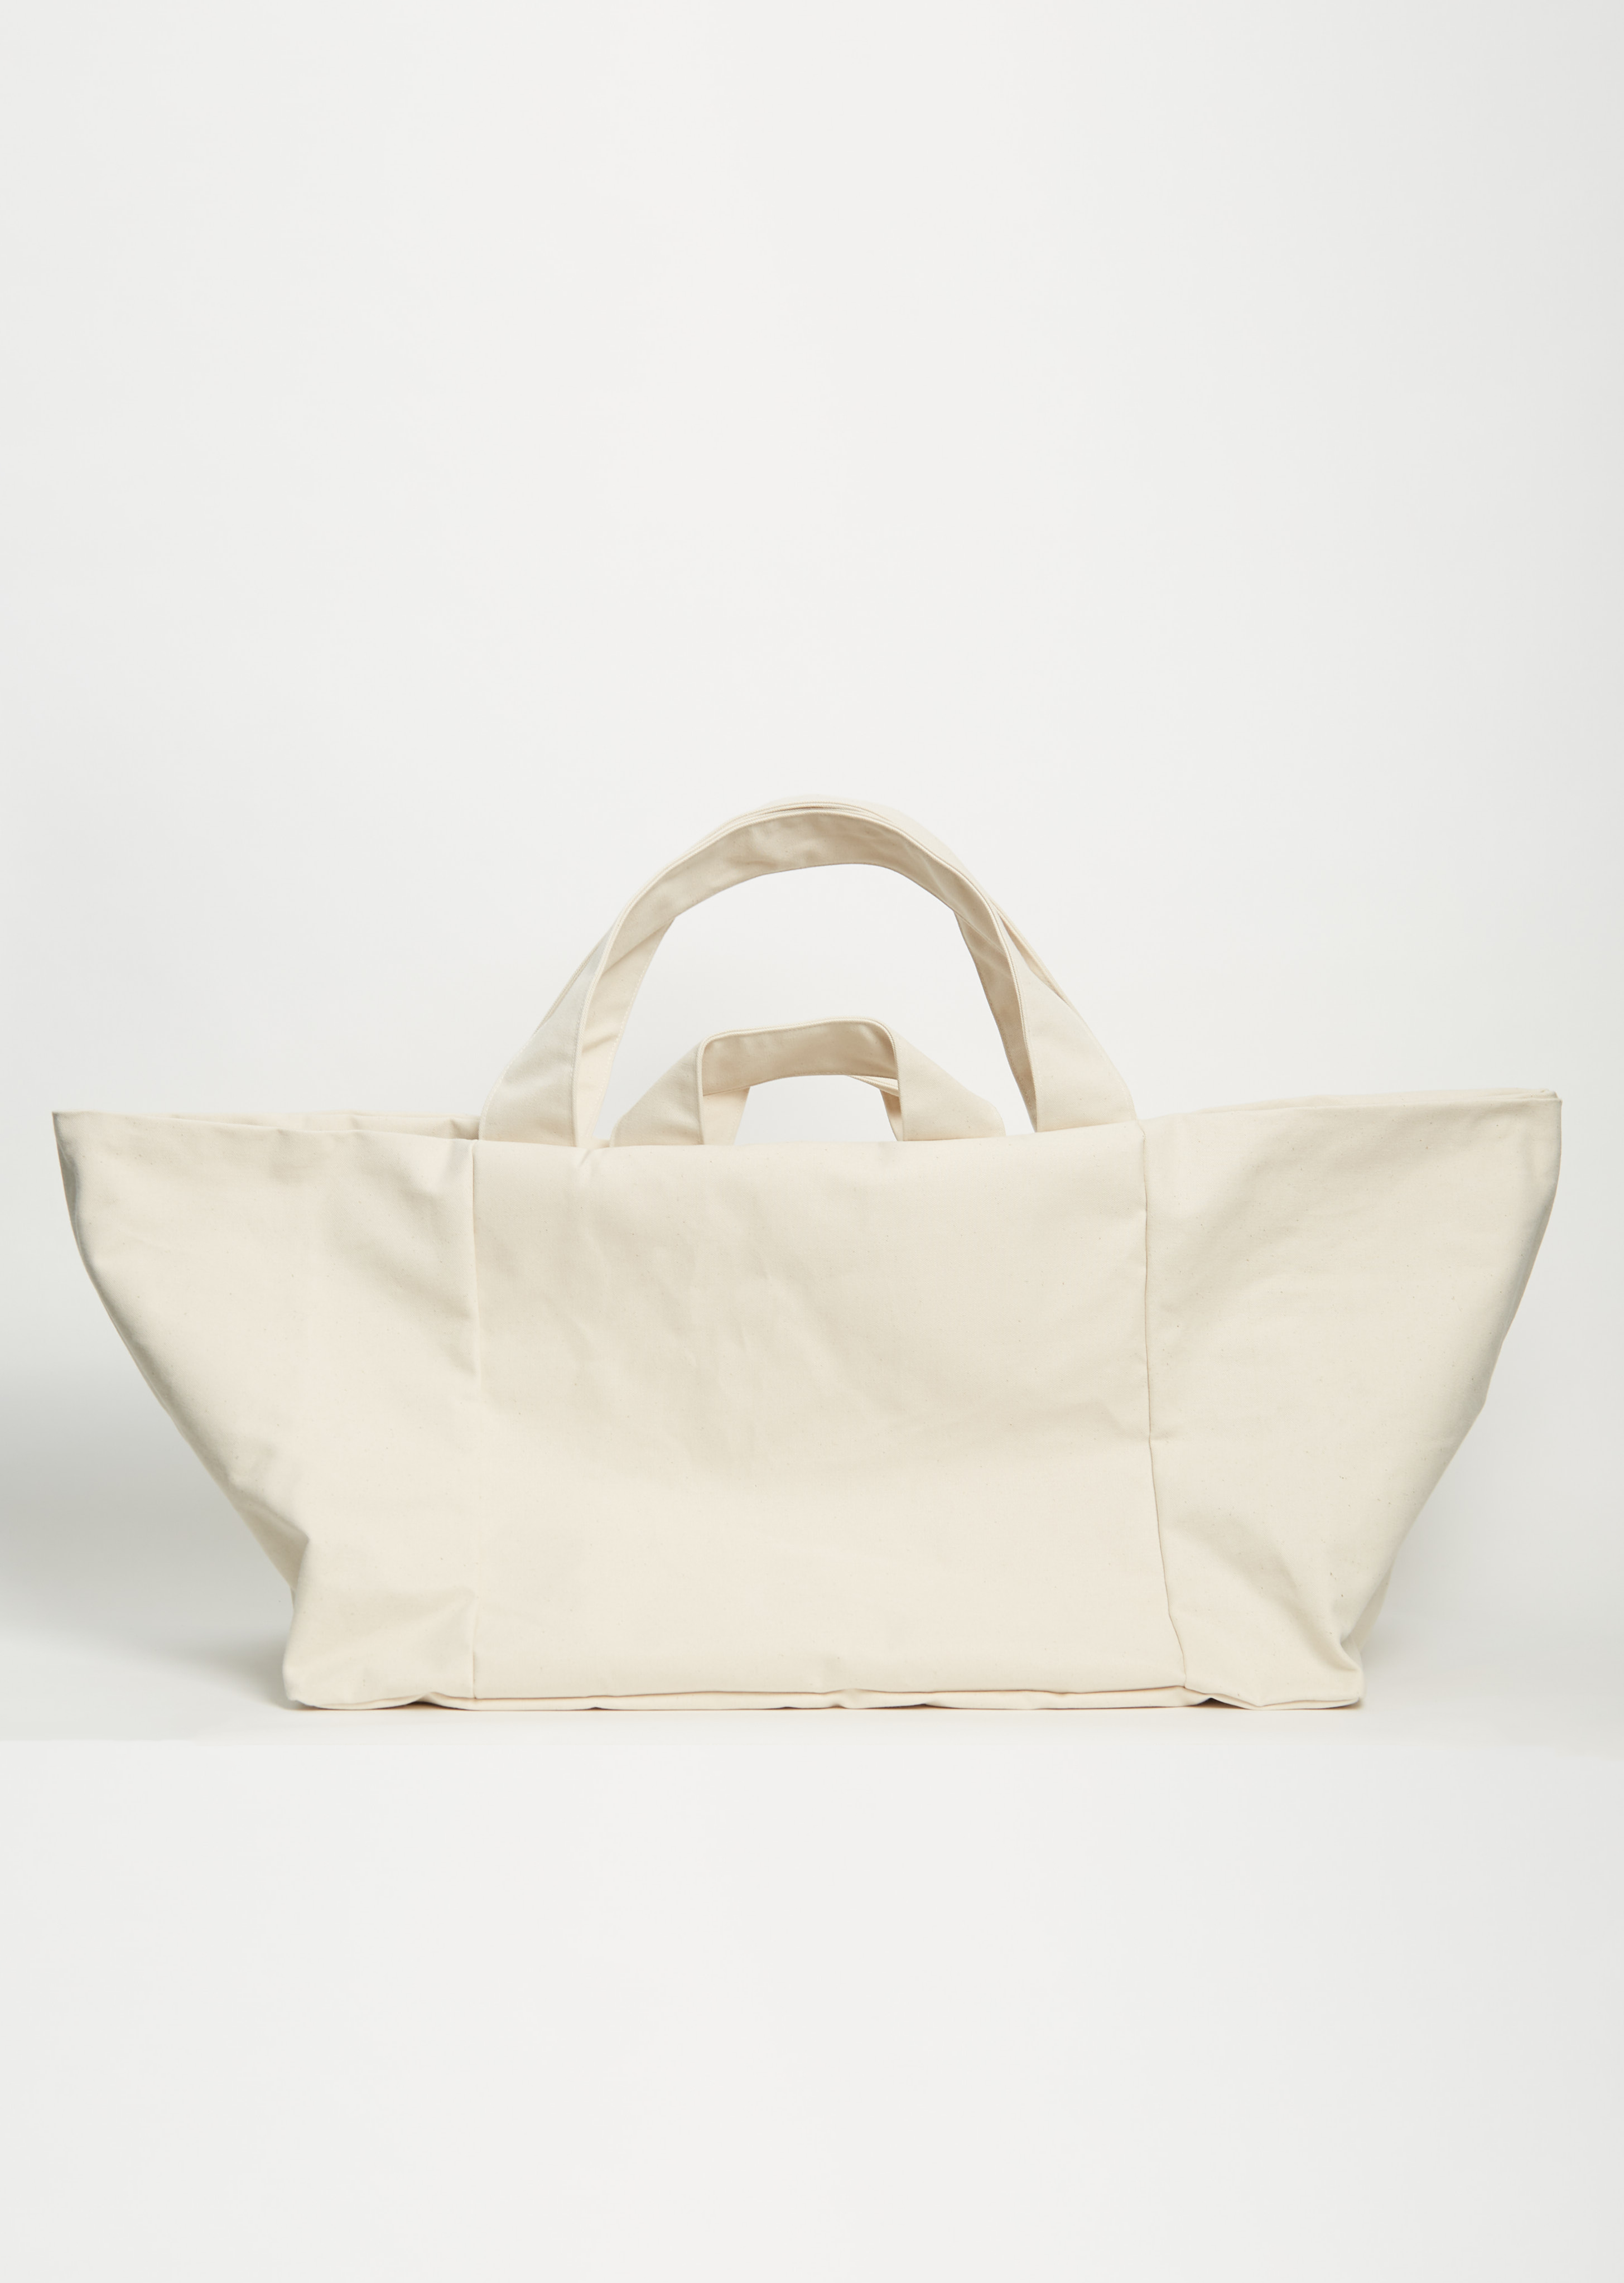 Japanese Magazine Gift Nike White Canvas Tote Shoulder Bag